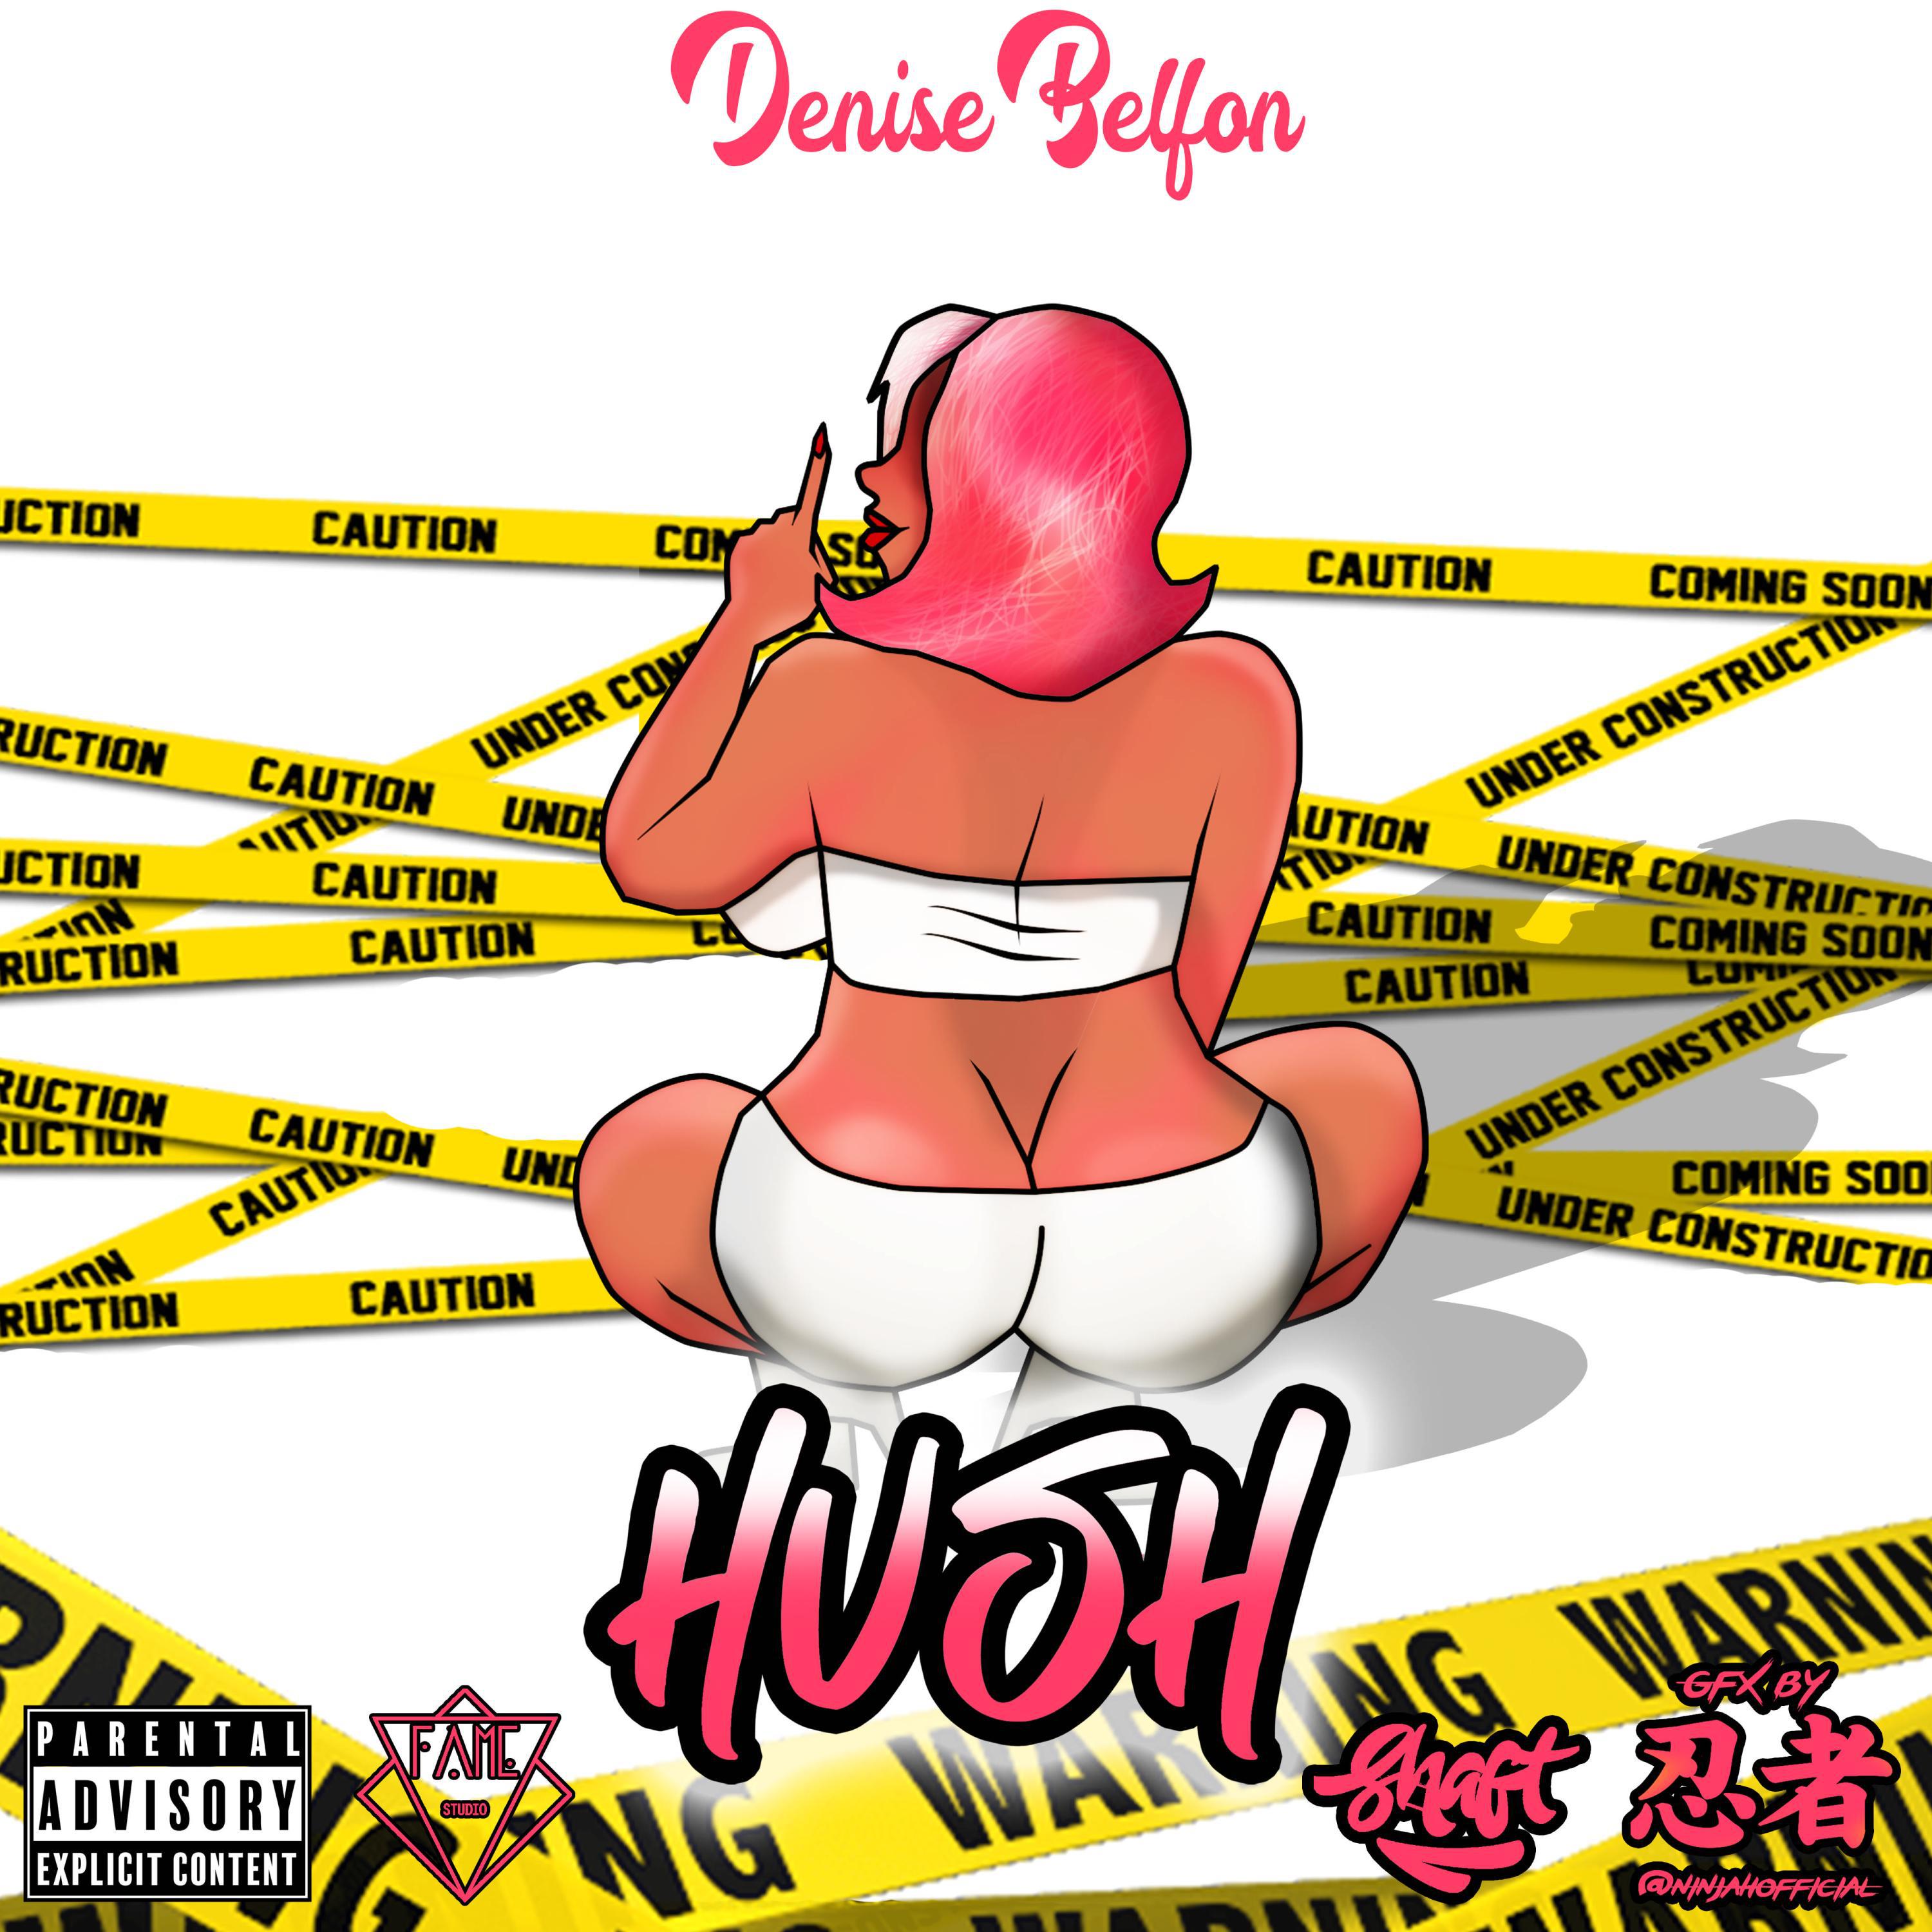 Denise Belfon - Hush!